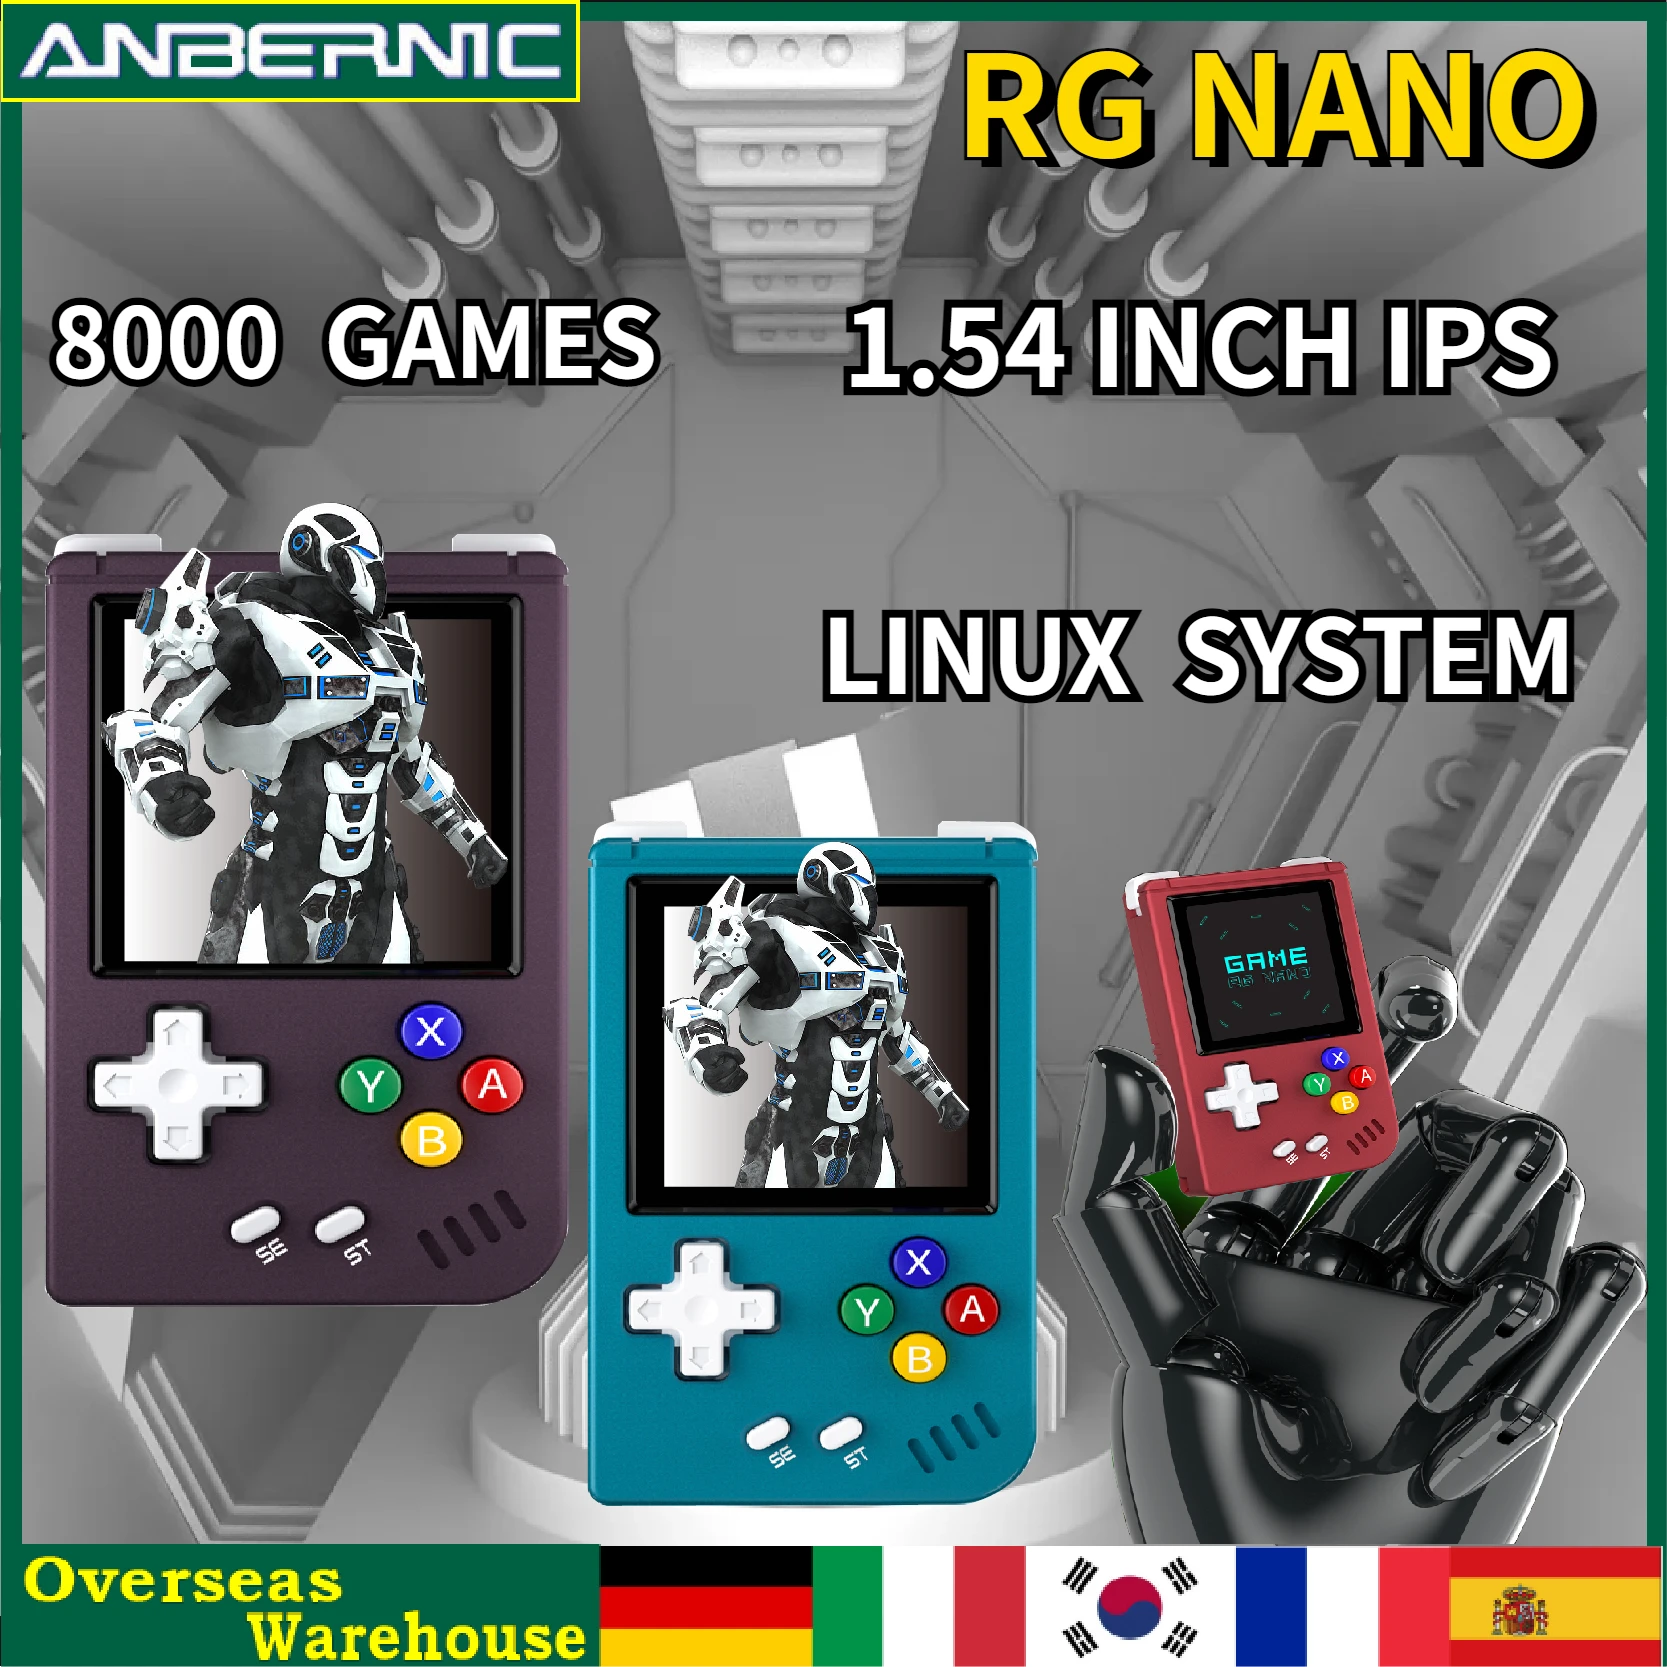 

ANBERNIC RG NANO Pocket Mini Handheld Game Player Metal Shell 1.54" IPS Screen Game Console Linux 1050mAh Battery Hi-fi Speaker